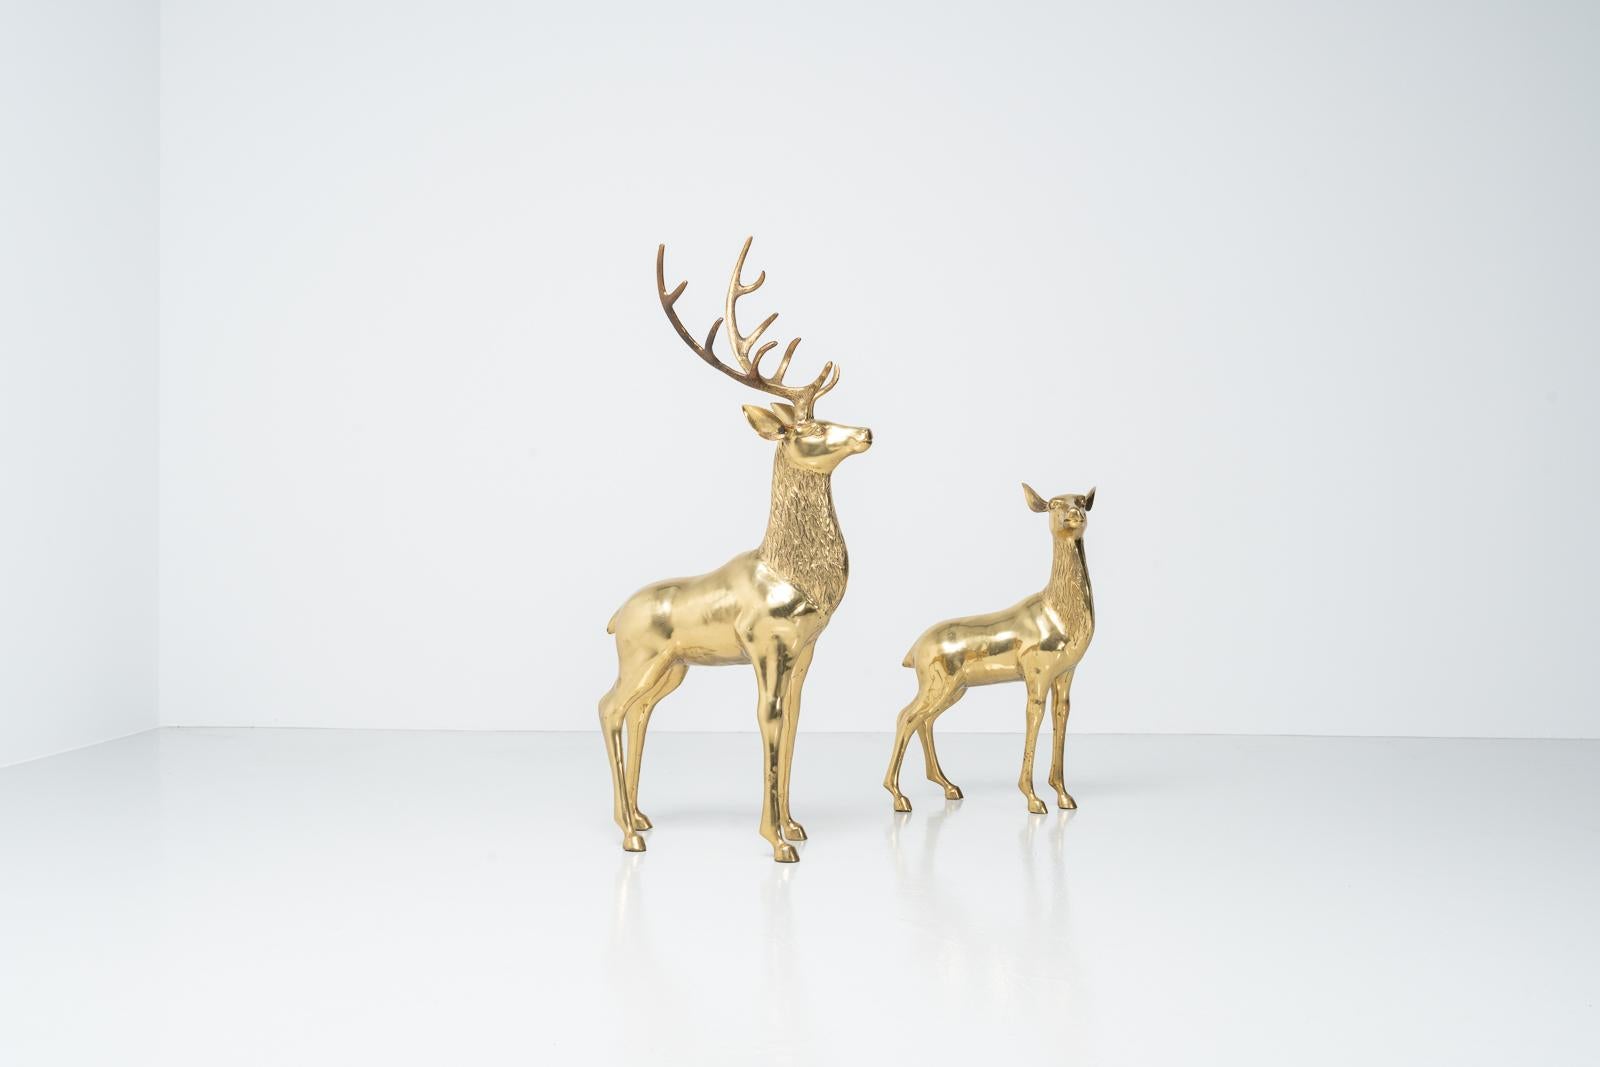 sculpted bronze reindeer